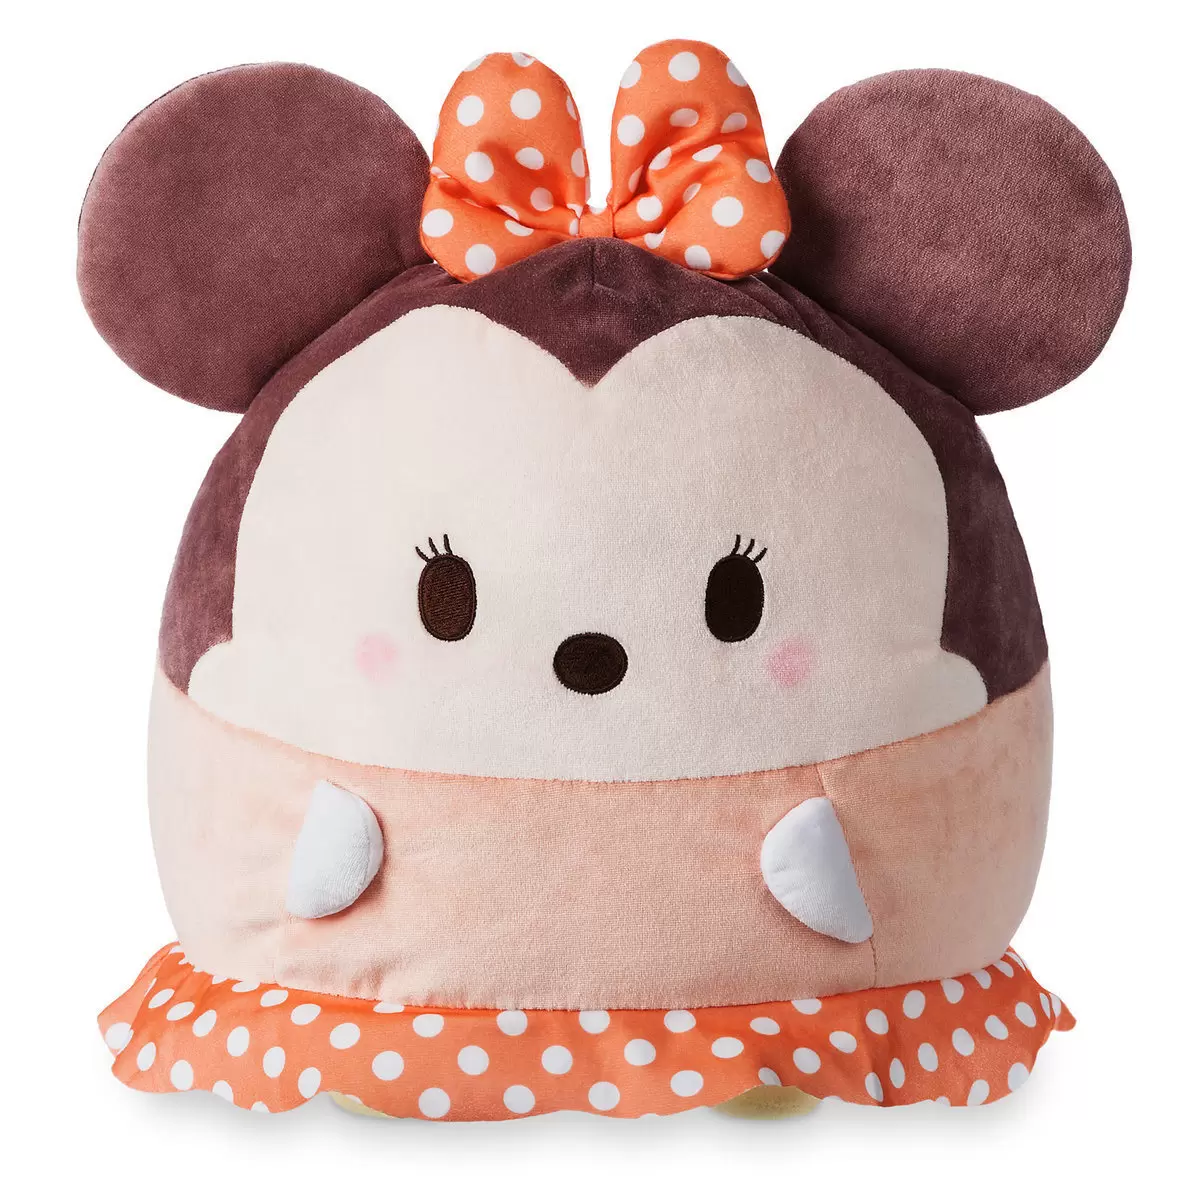 Ufufy Plush - Minnie Mouse 2018